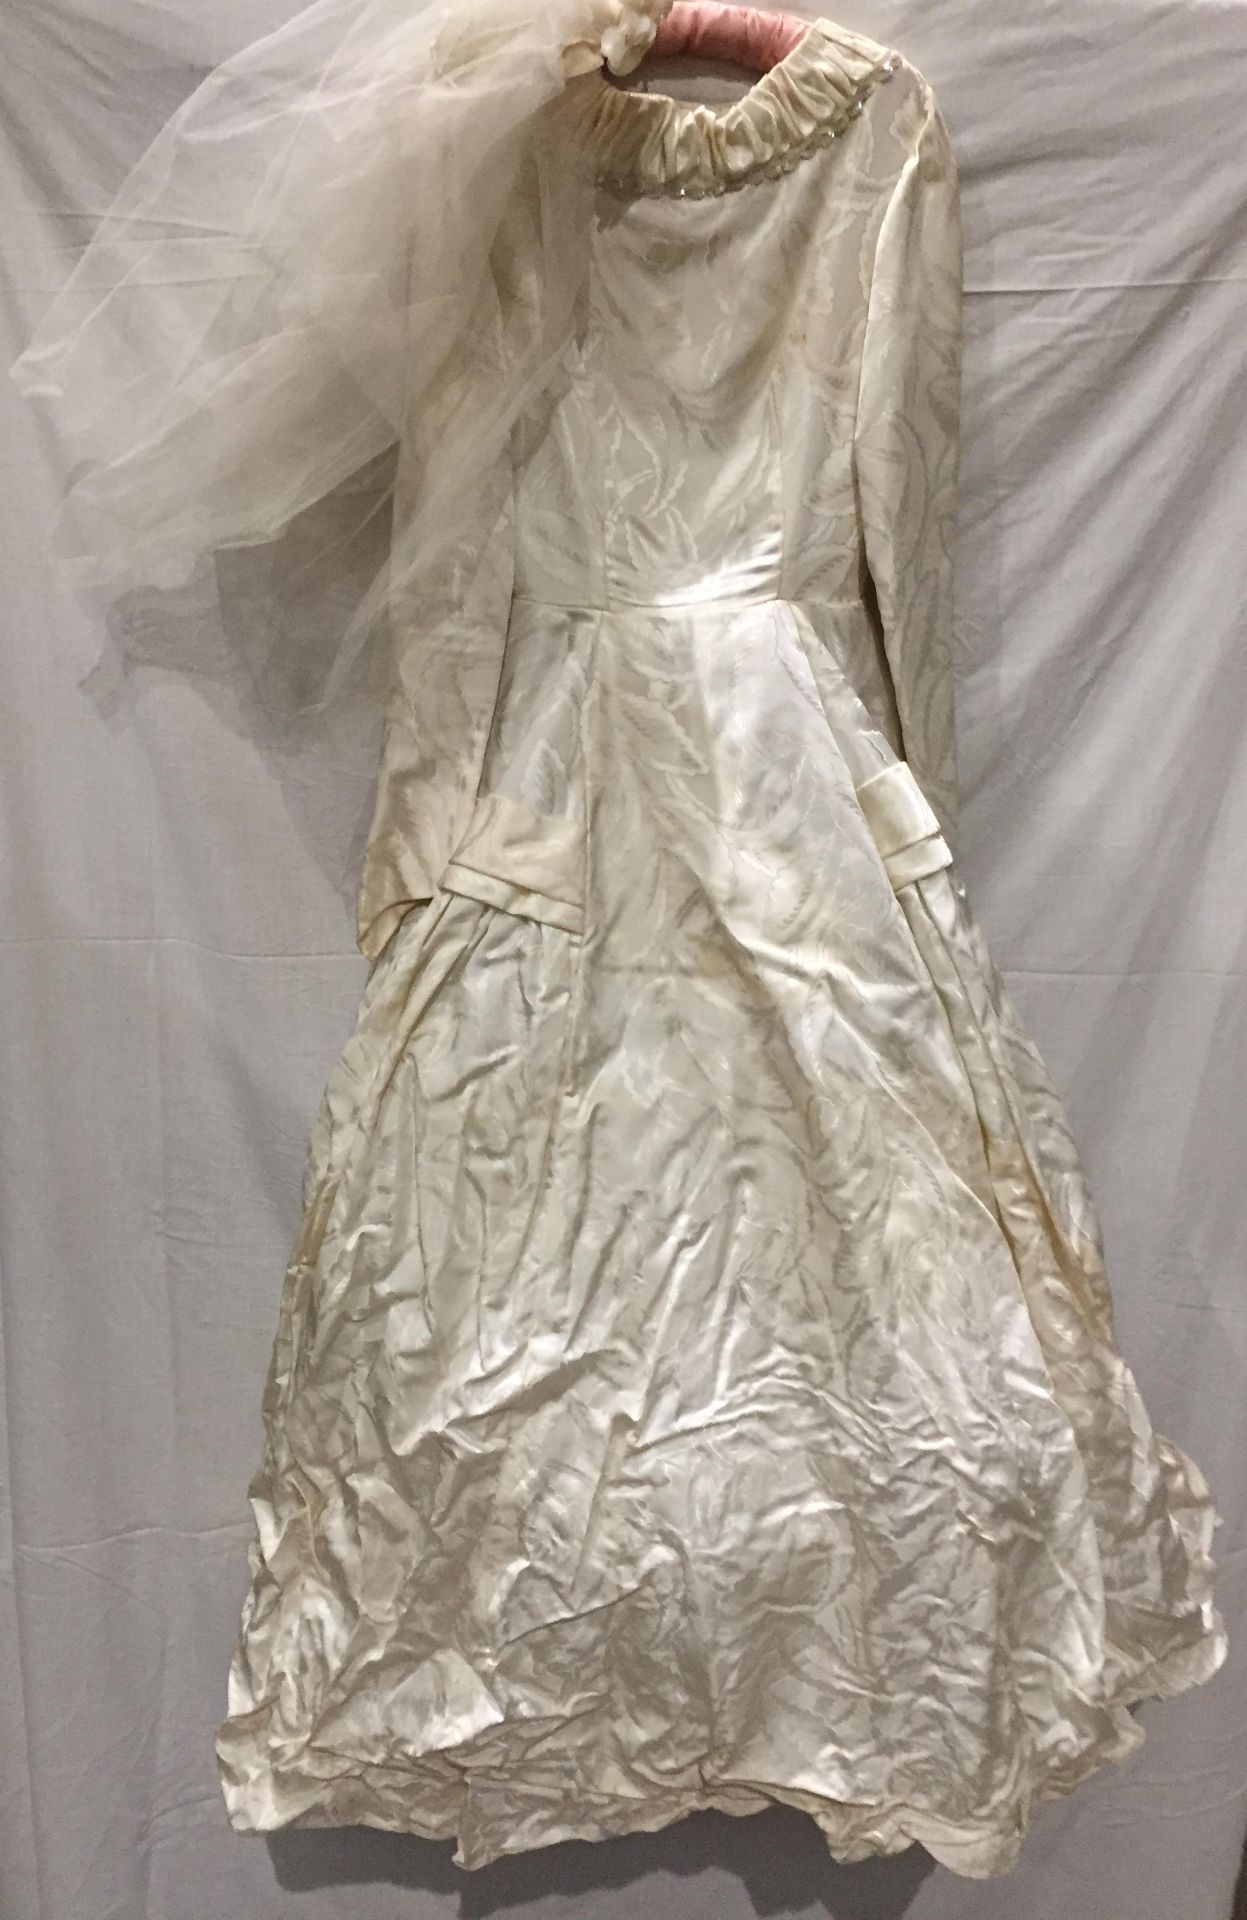 An ivory wedding dress,